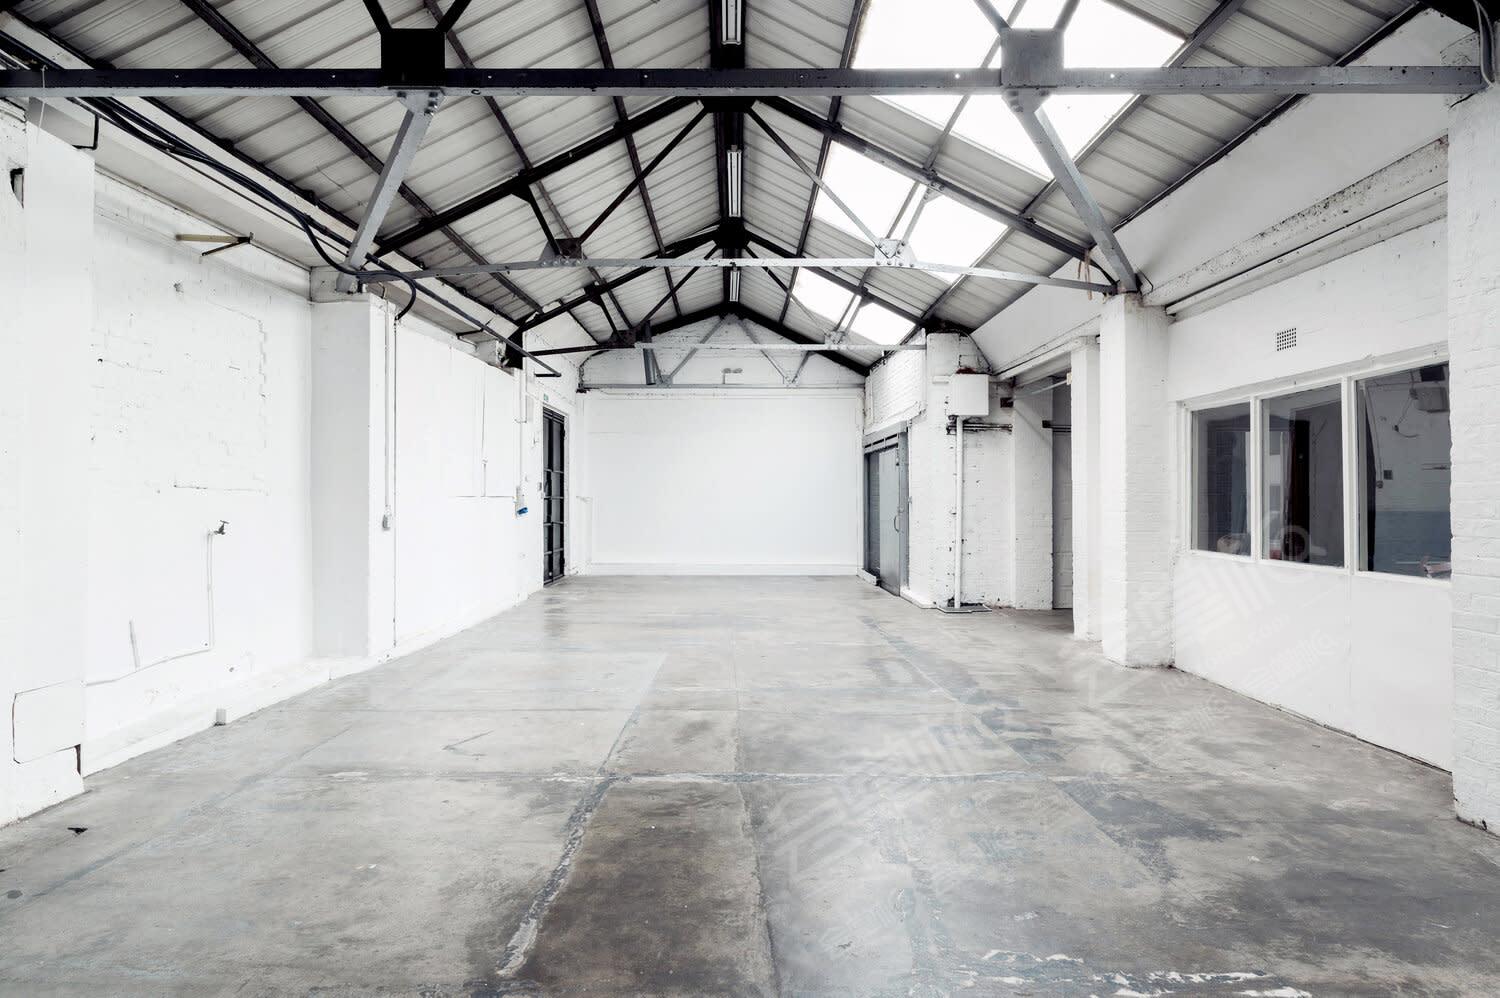 East London Studio Complex: Warehouse & Gallery